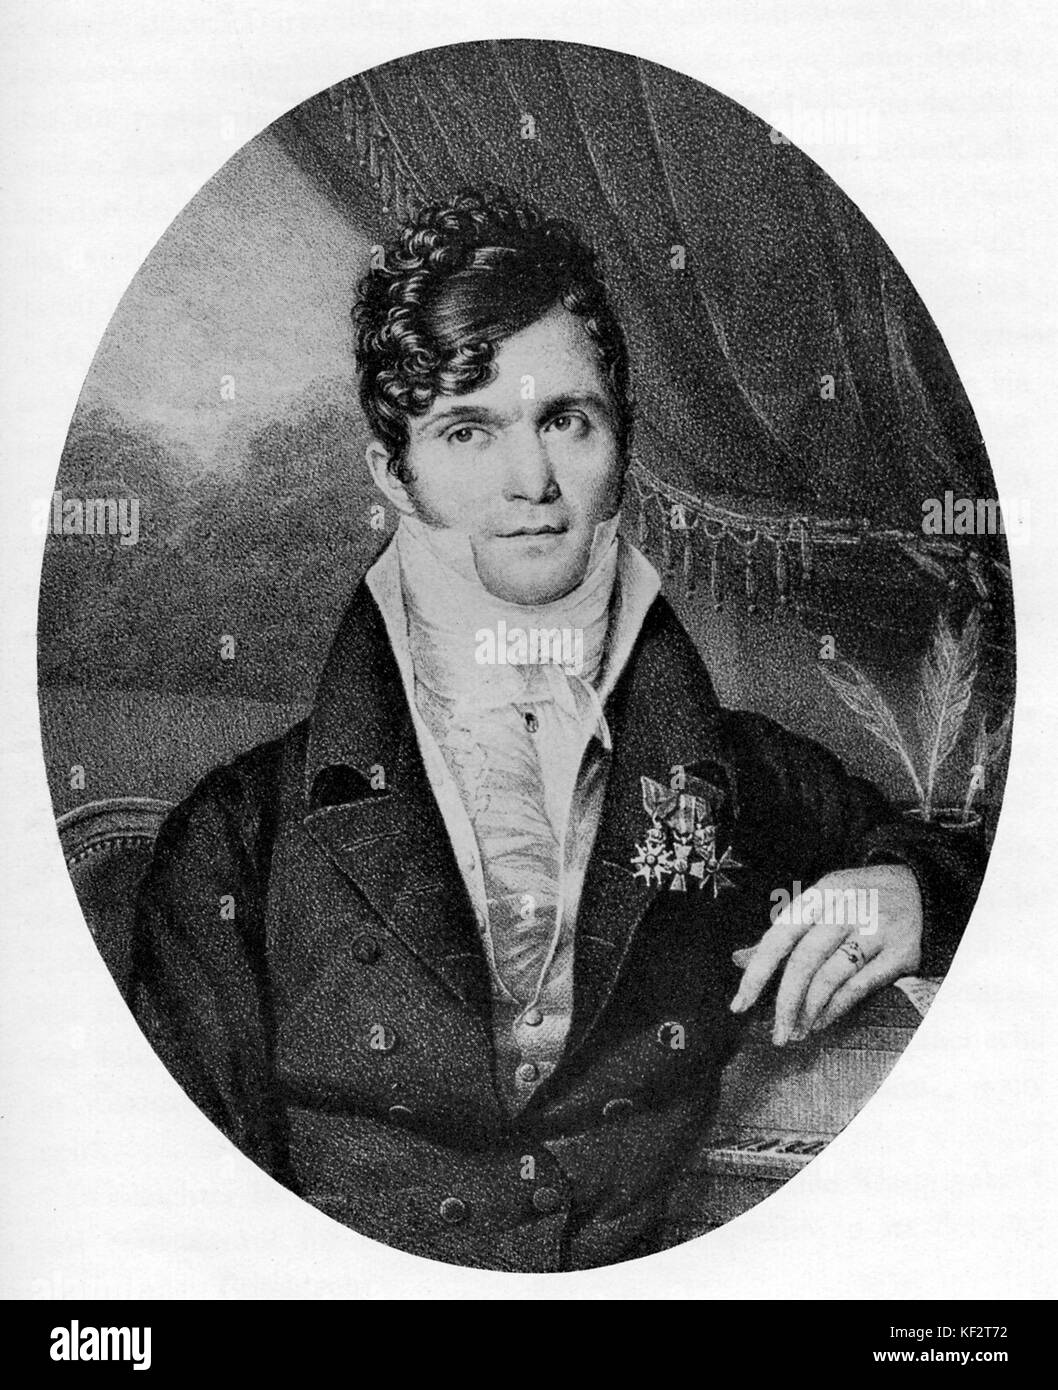 Luigi Gaspare Spontini, Italian opera composer. From a lithography by Jean Guérin. 14 November 1774 - 24 January 1851. Stock Photo